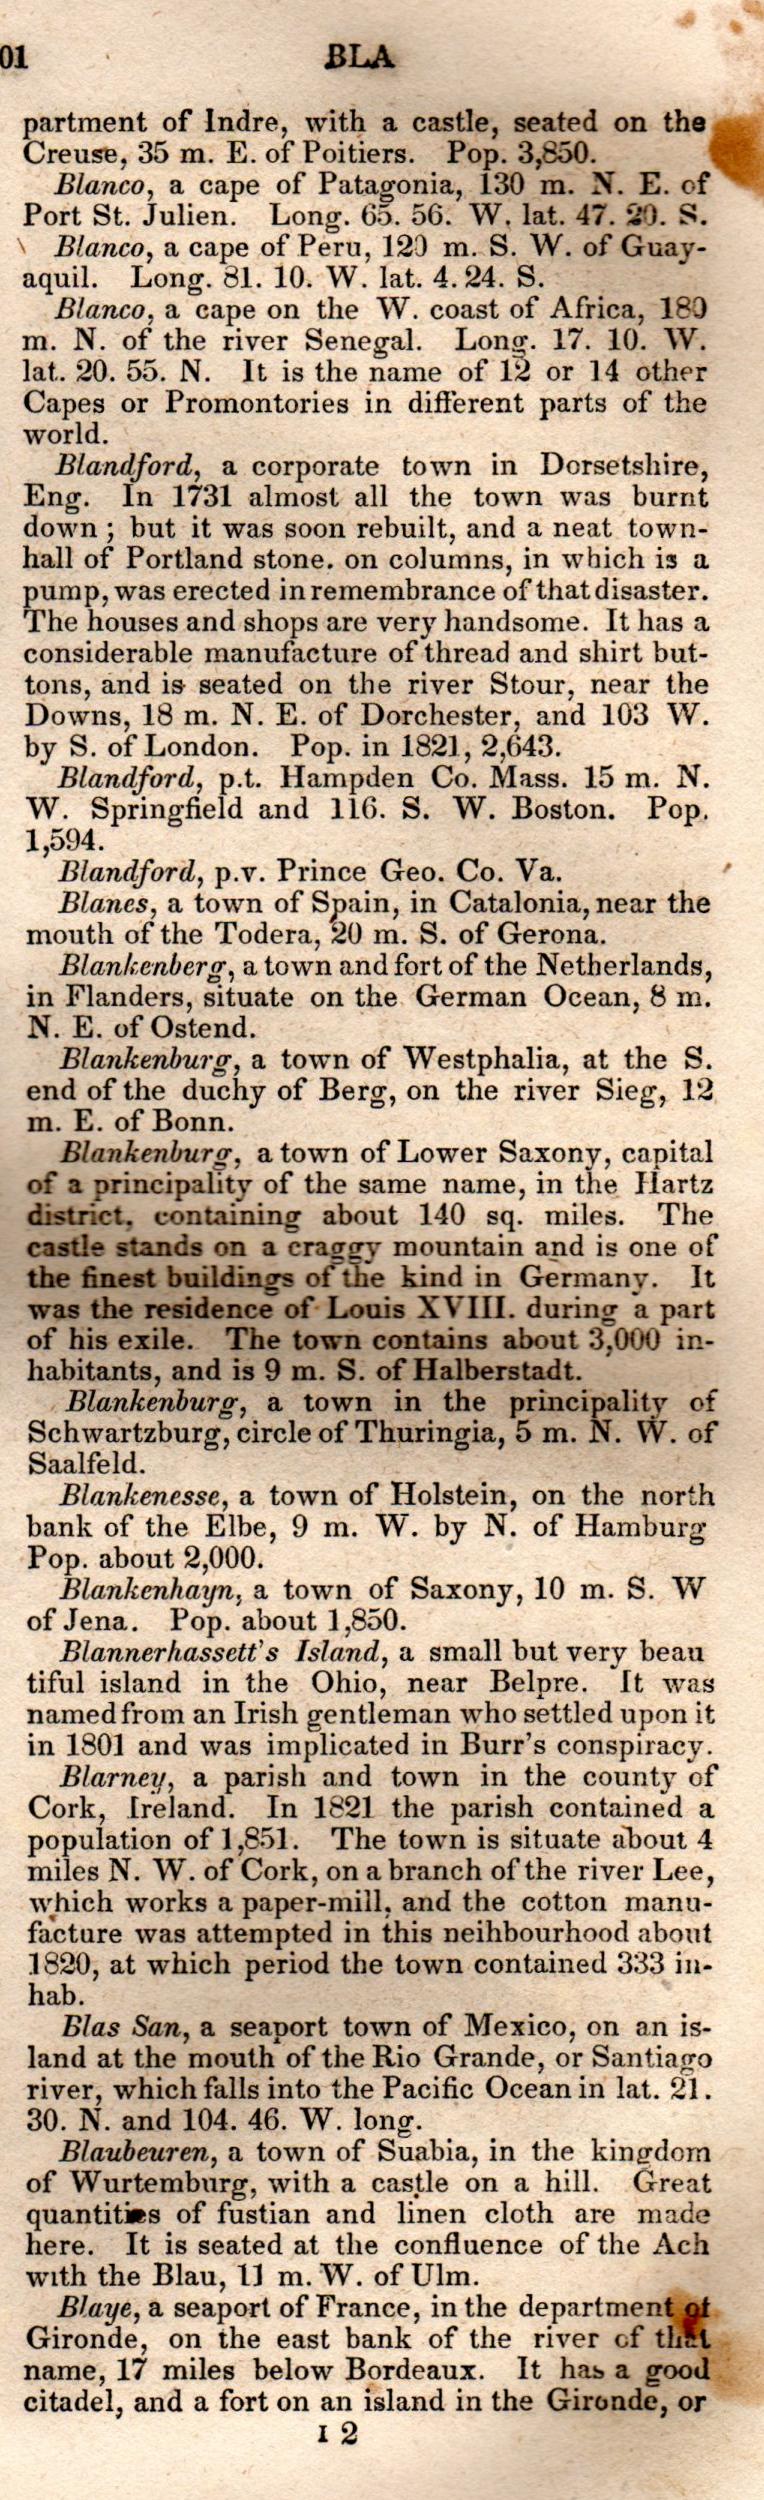 Brookes’ Universal Gazetteer (1850), Page 101 Right Column